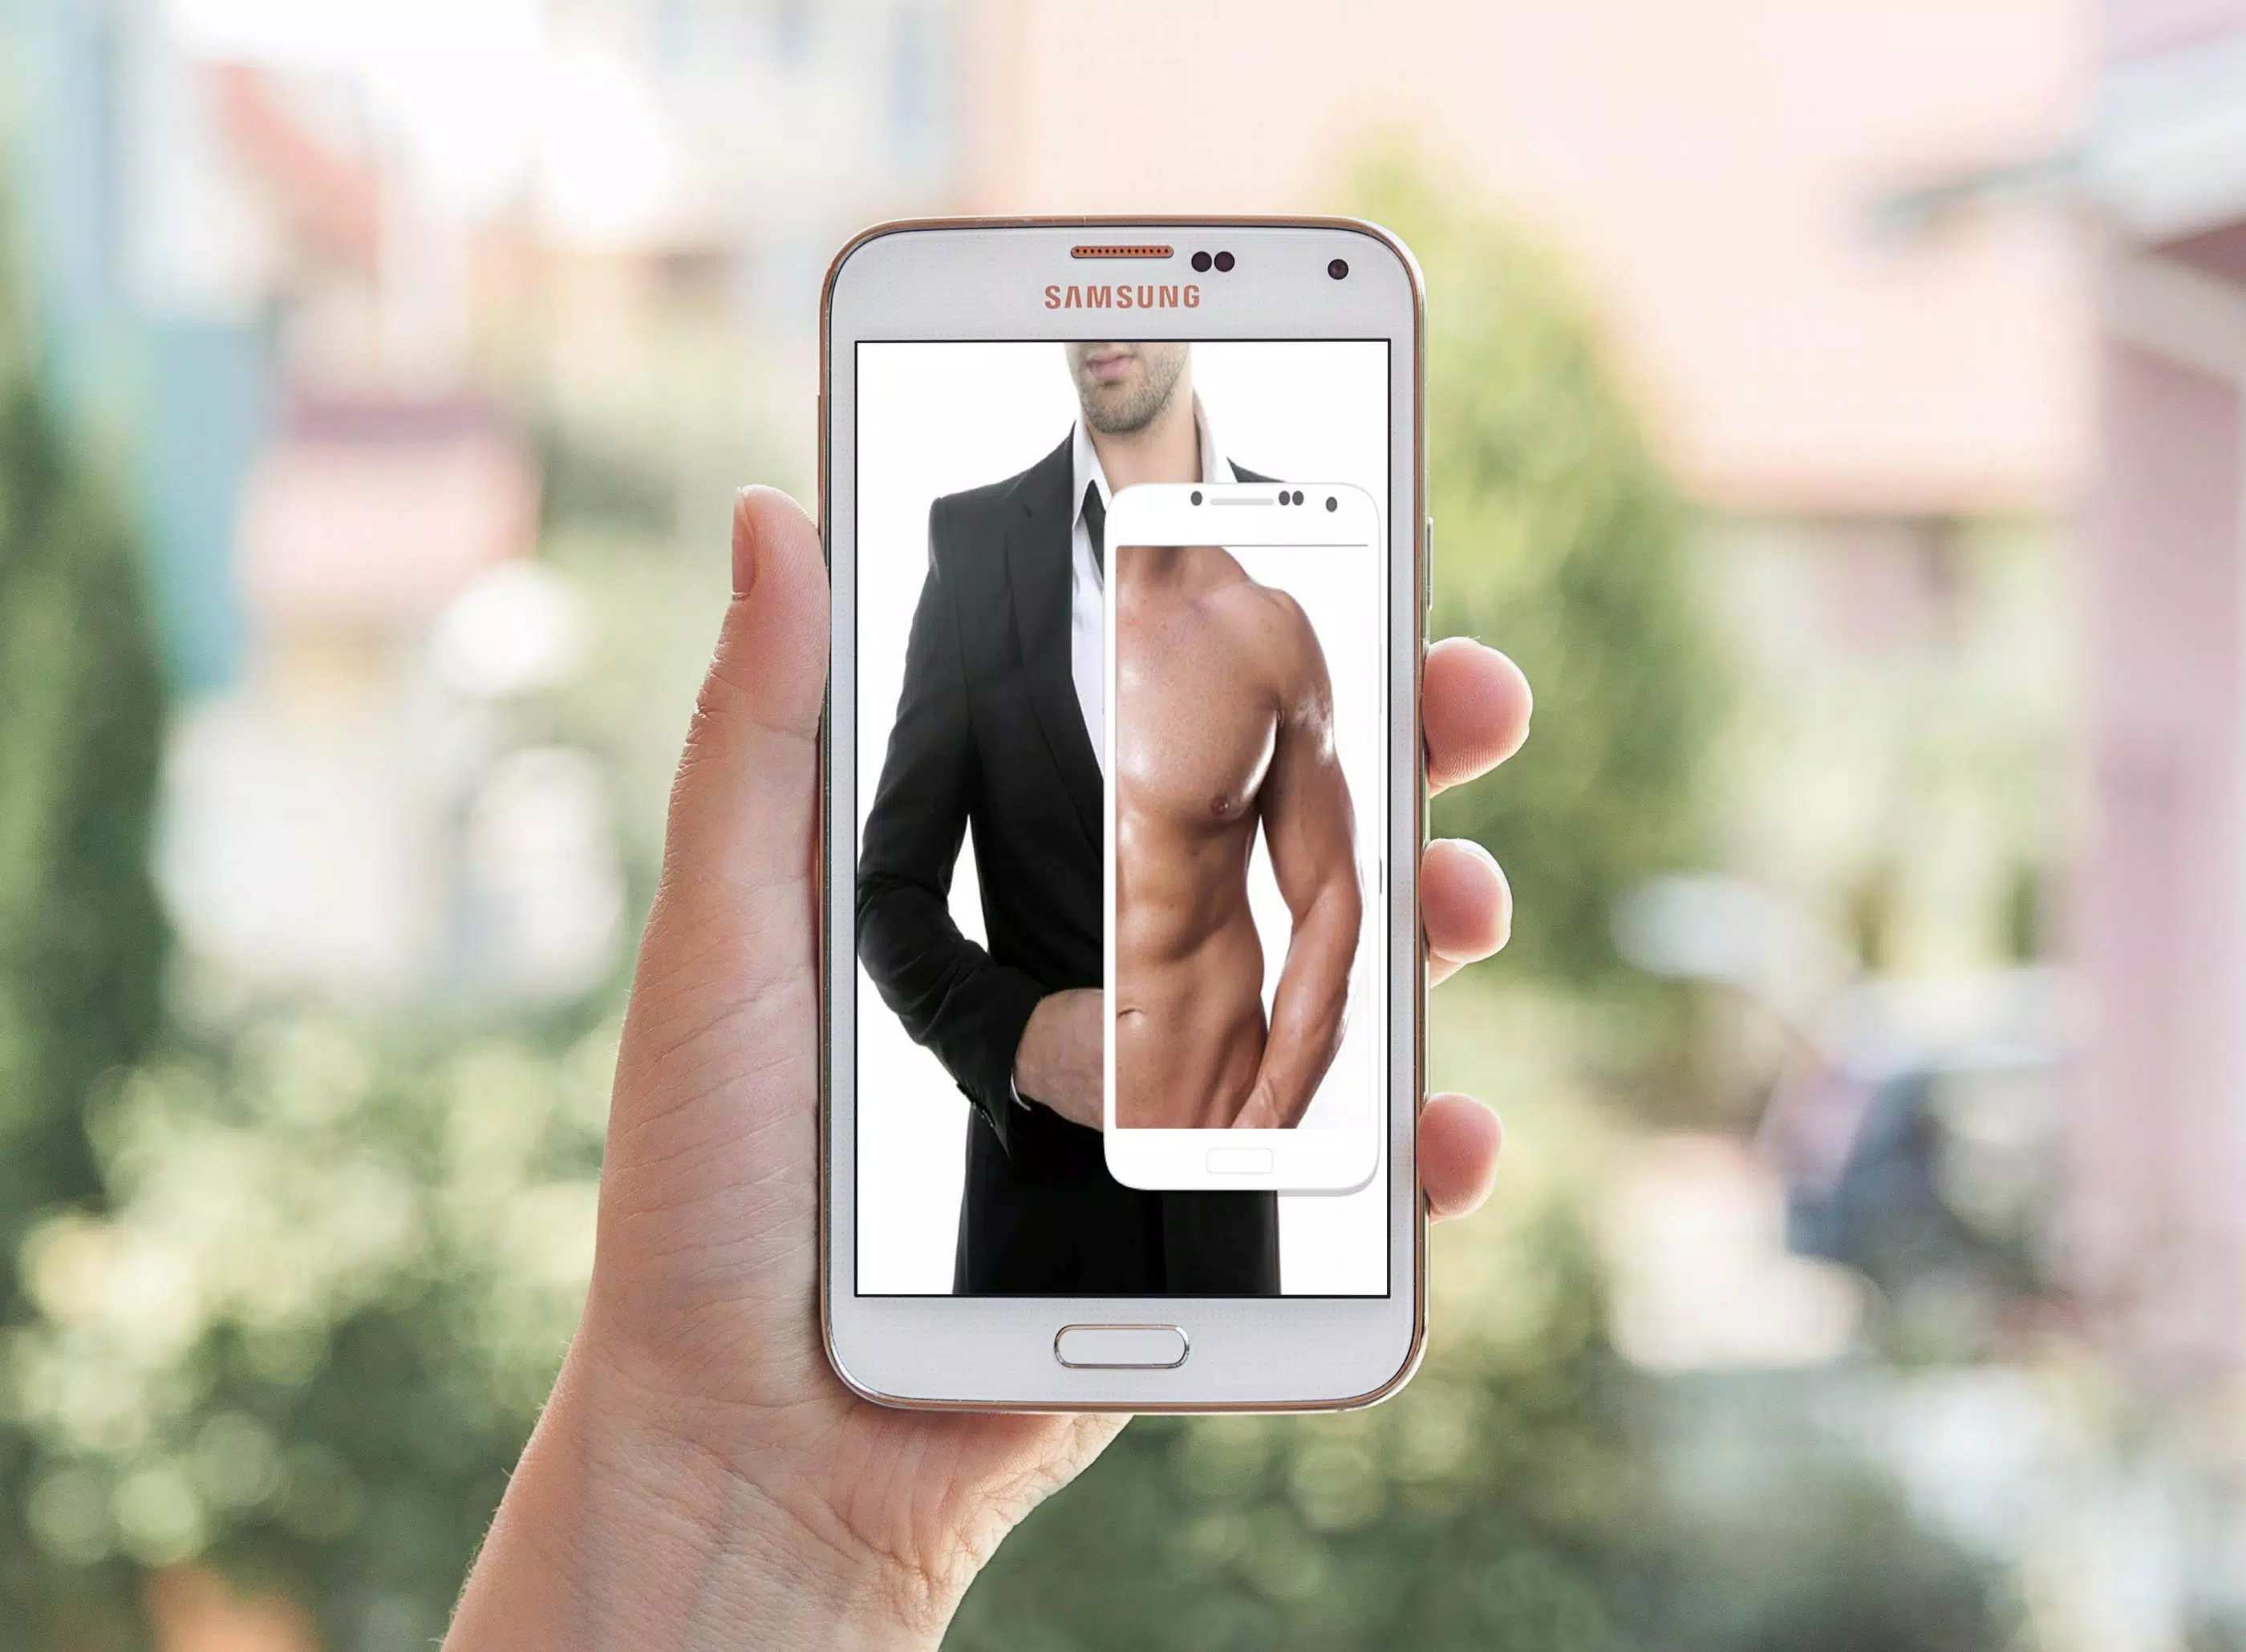 كاشف الجسم بدون ملابس APK for Android Download